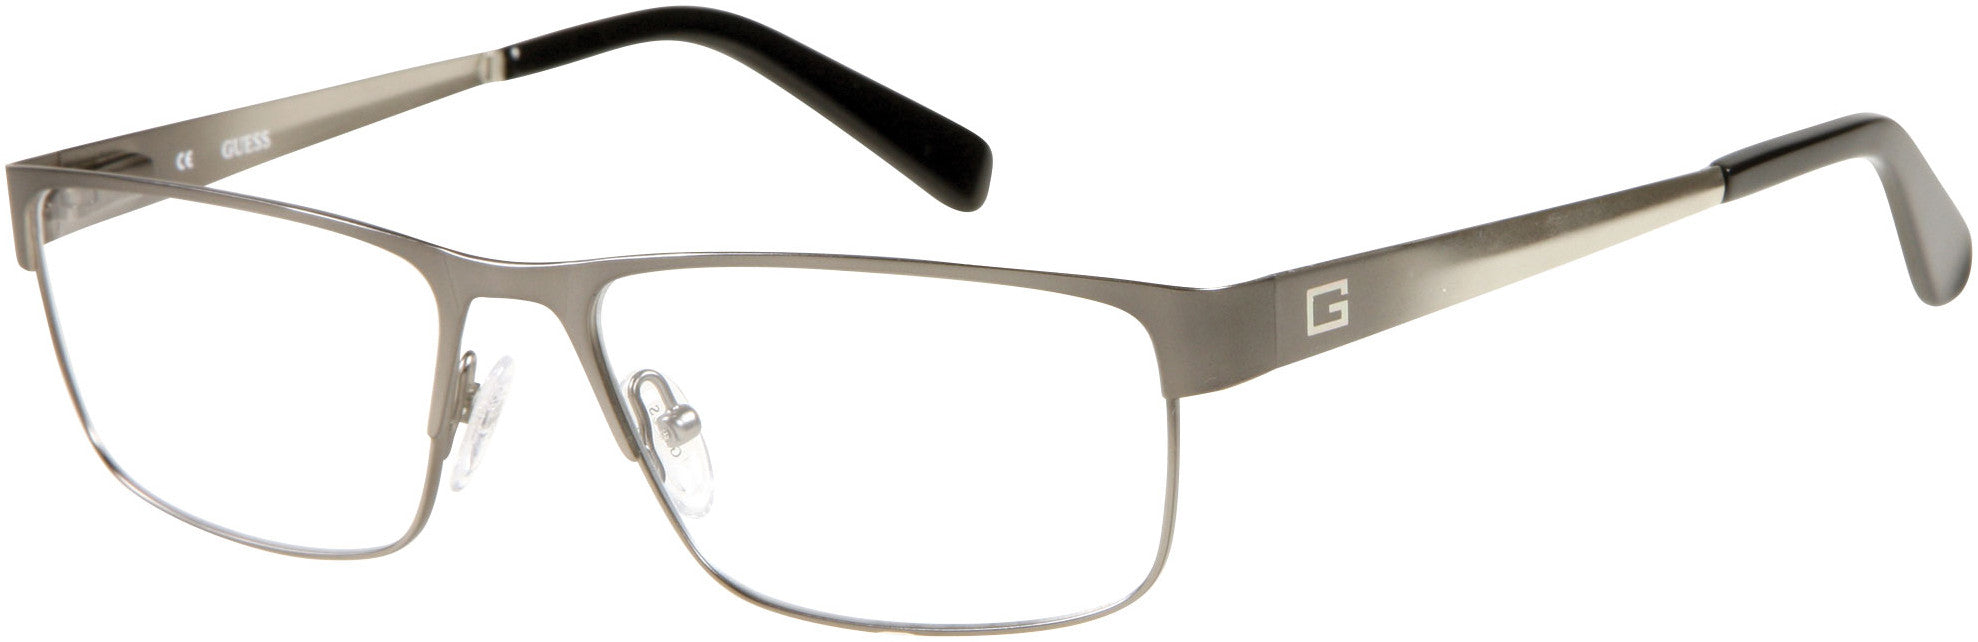 Guess GU1770 Eyeglasses J14-J14 - Metal